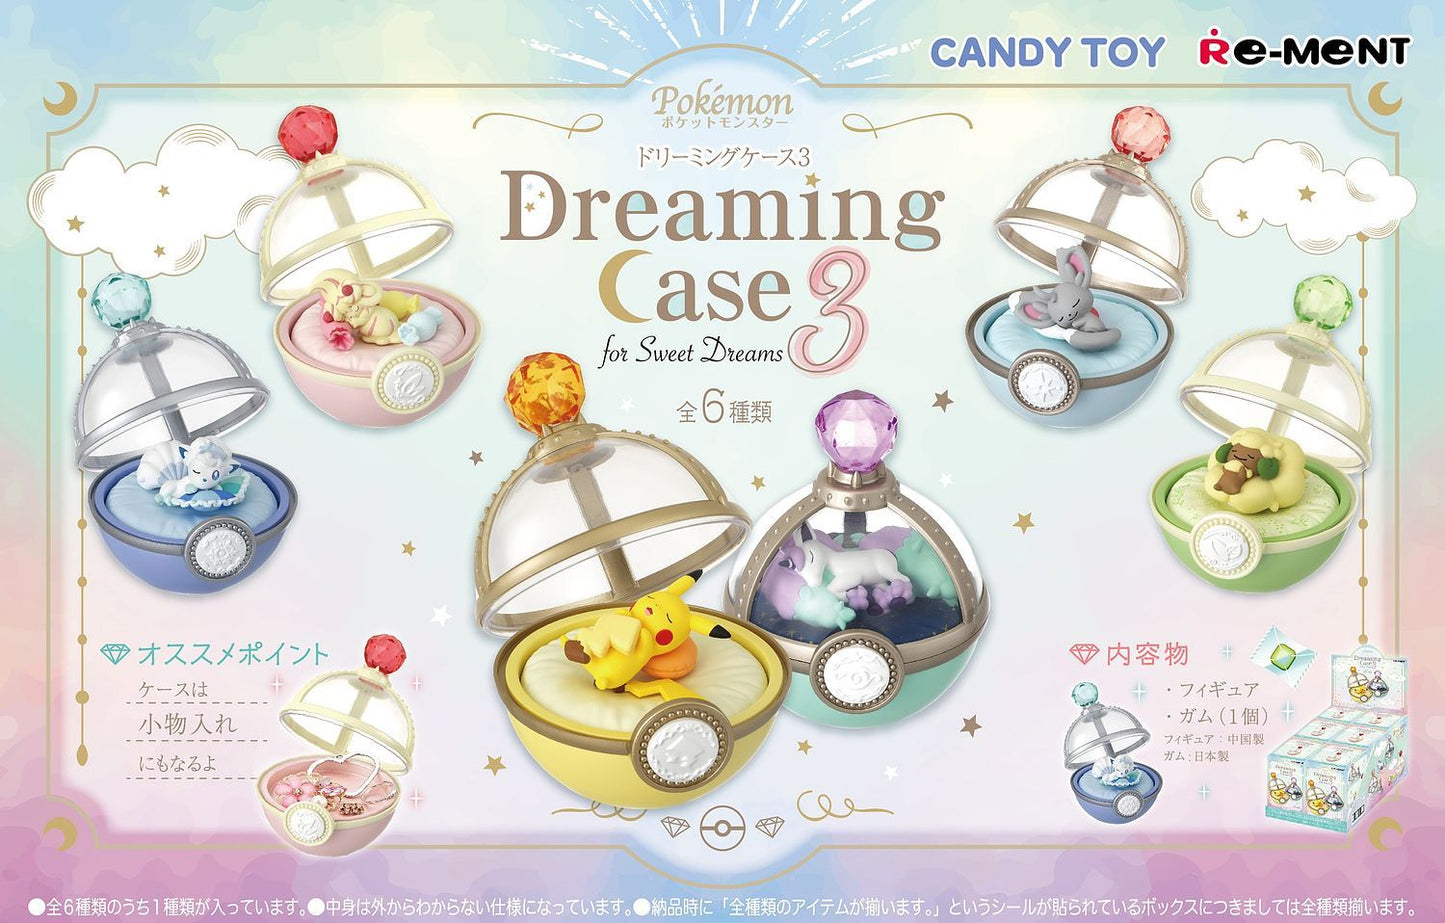 Pokemon: Dreaming Case 3 For Sweet Dreams